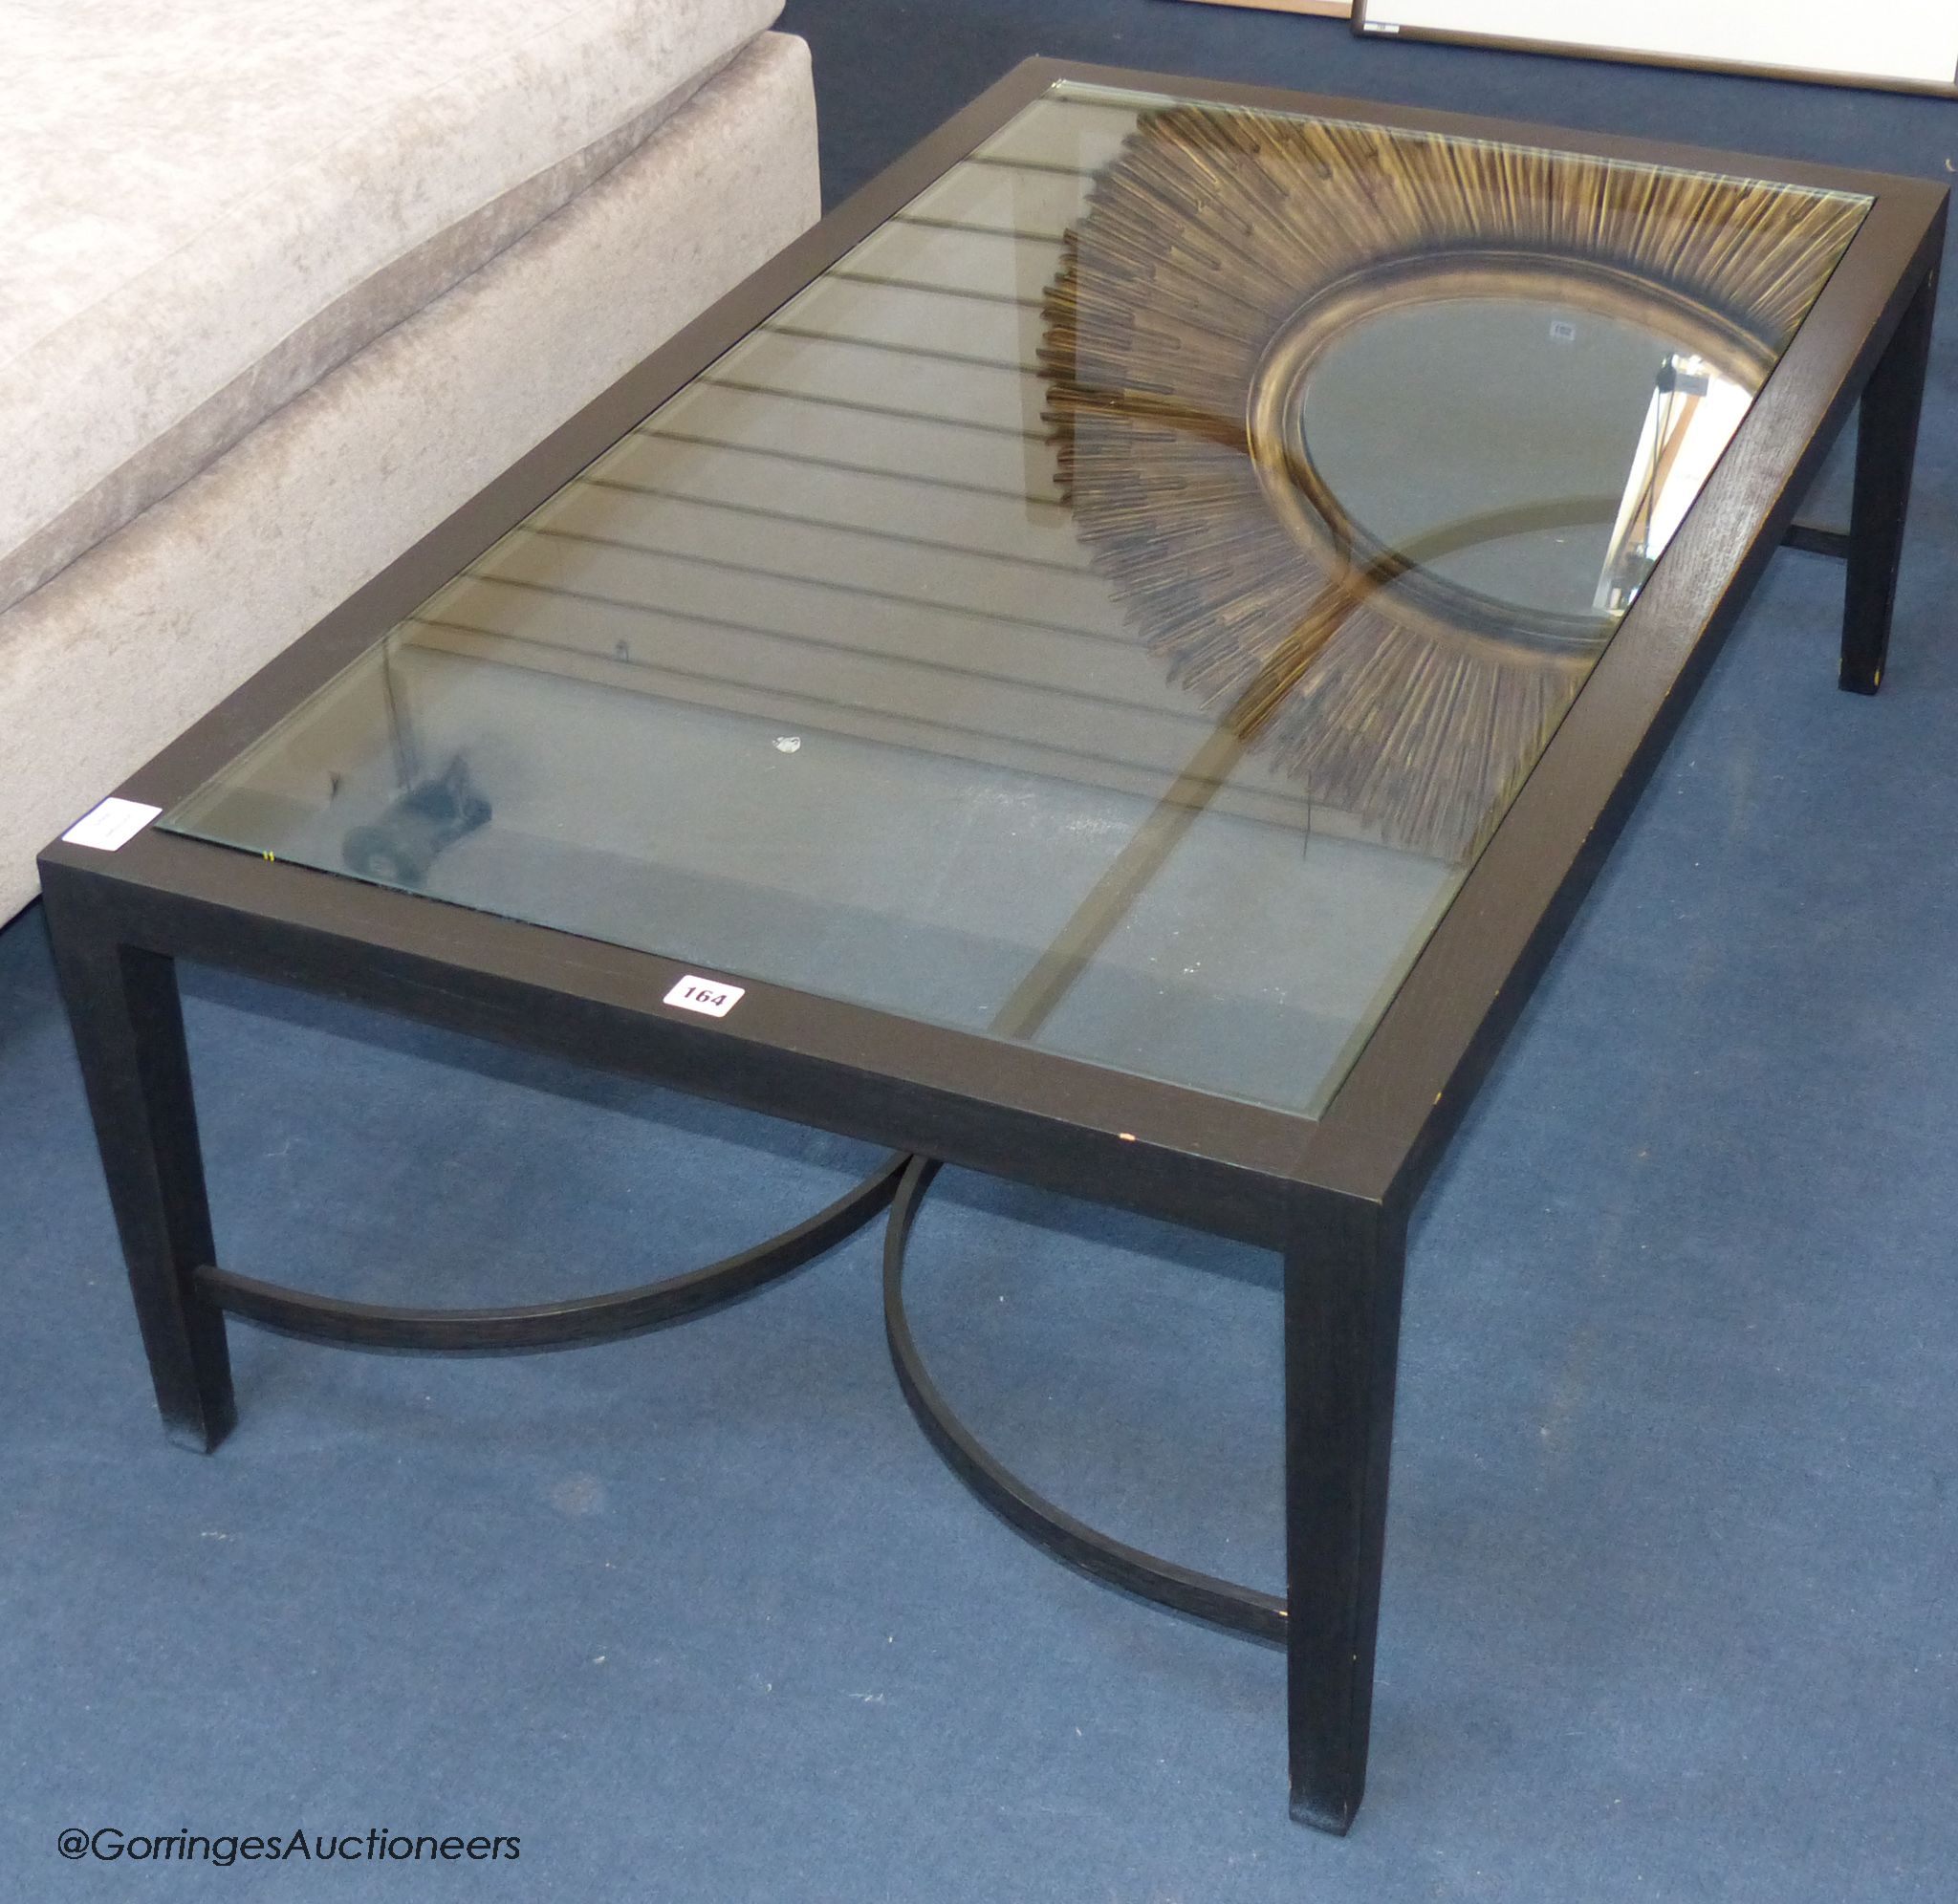 An ebonised ash and glass coffee table, 120 cm long, 70 cm deep, 40 cm high